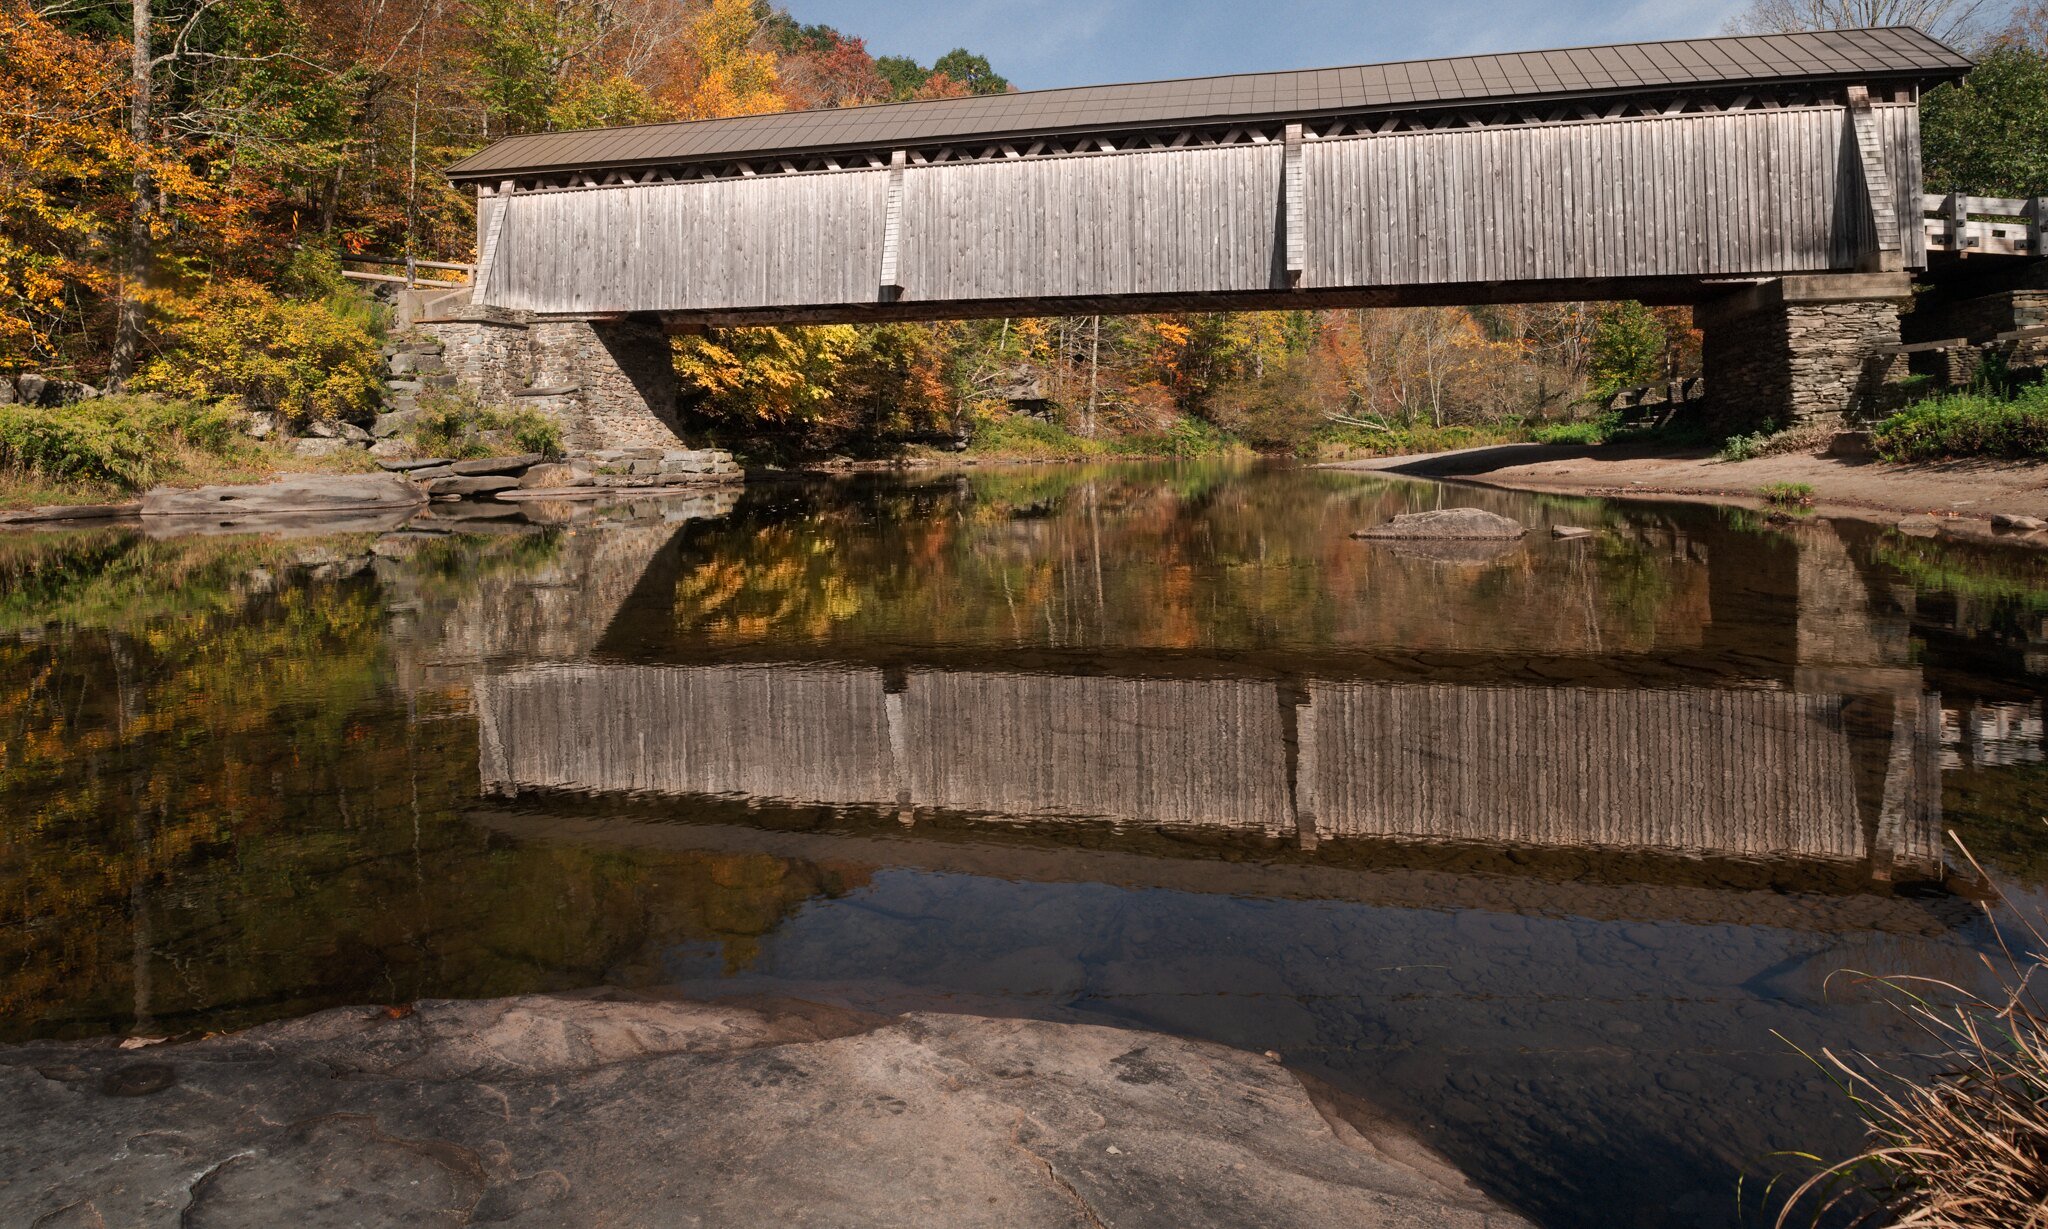  Beaverkill Covered Bridge in Beaverkill State Park near Roscoe, Sullivan County, NY.  Built in 1866. 